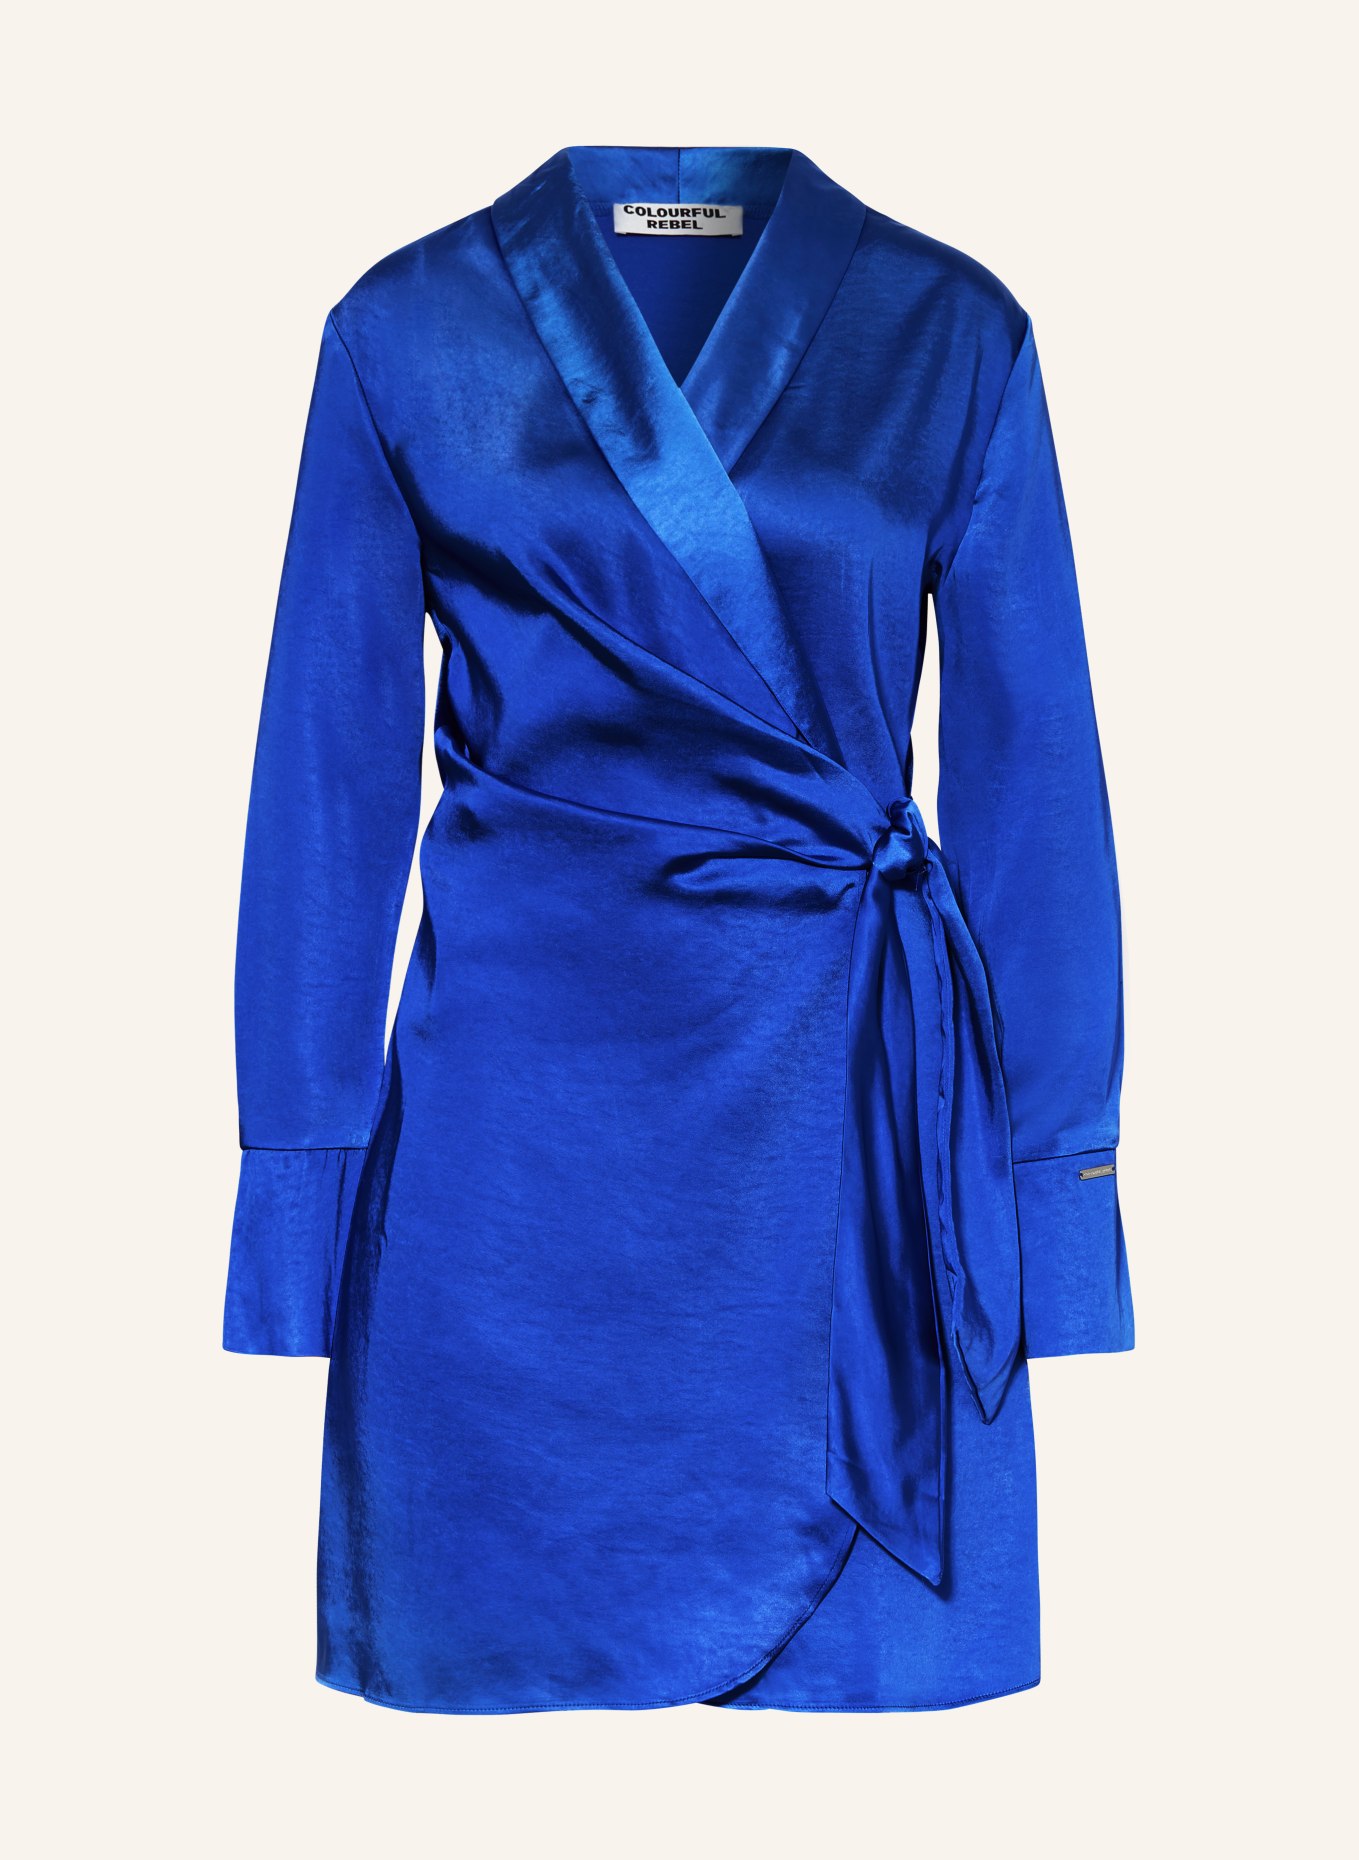 COLOURFUL REBEL Wickelkleid DORIN aus Satin, Farbe: BLAU (Bild 1)